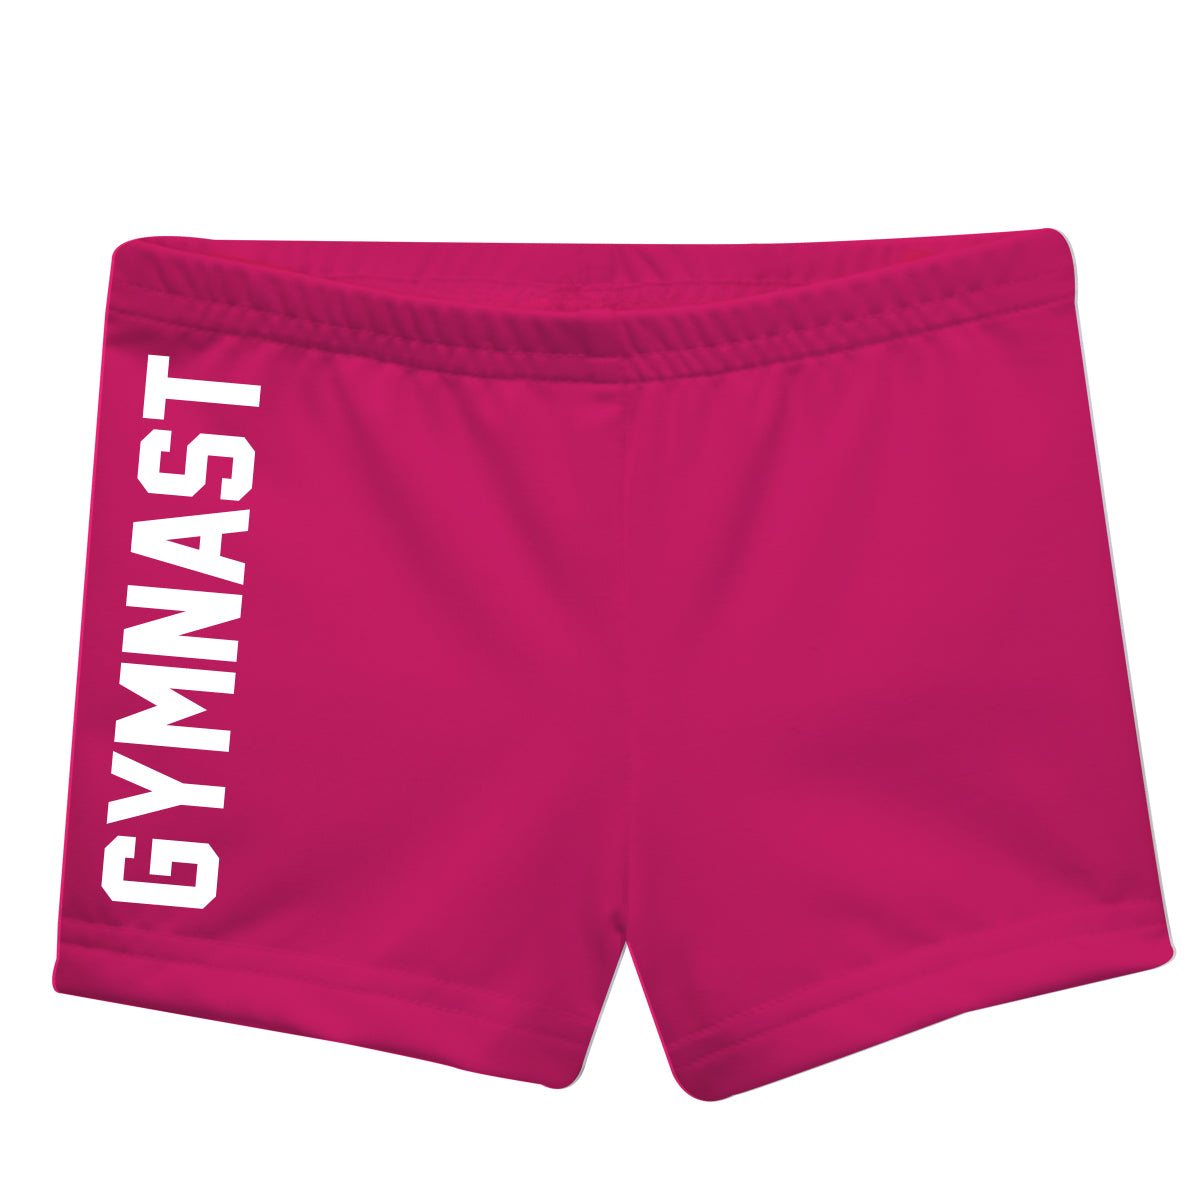 Gymnast girls shorts - Wimziy&Co.